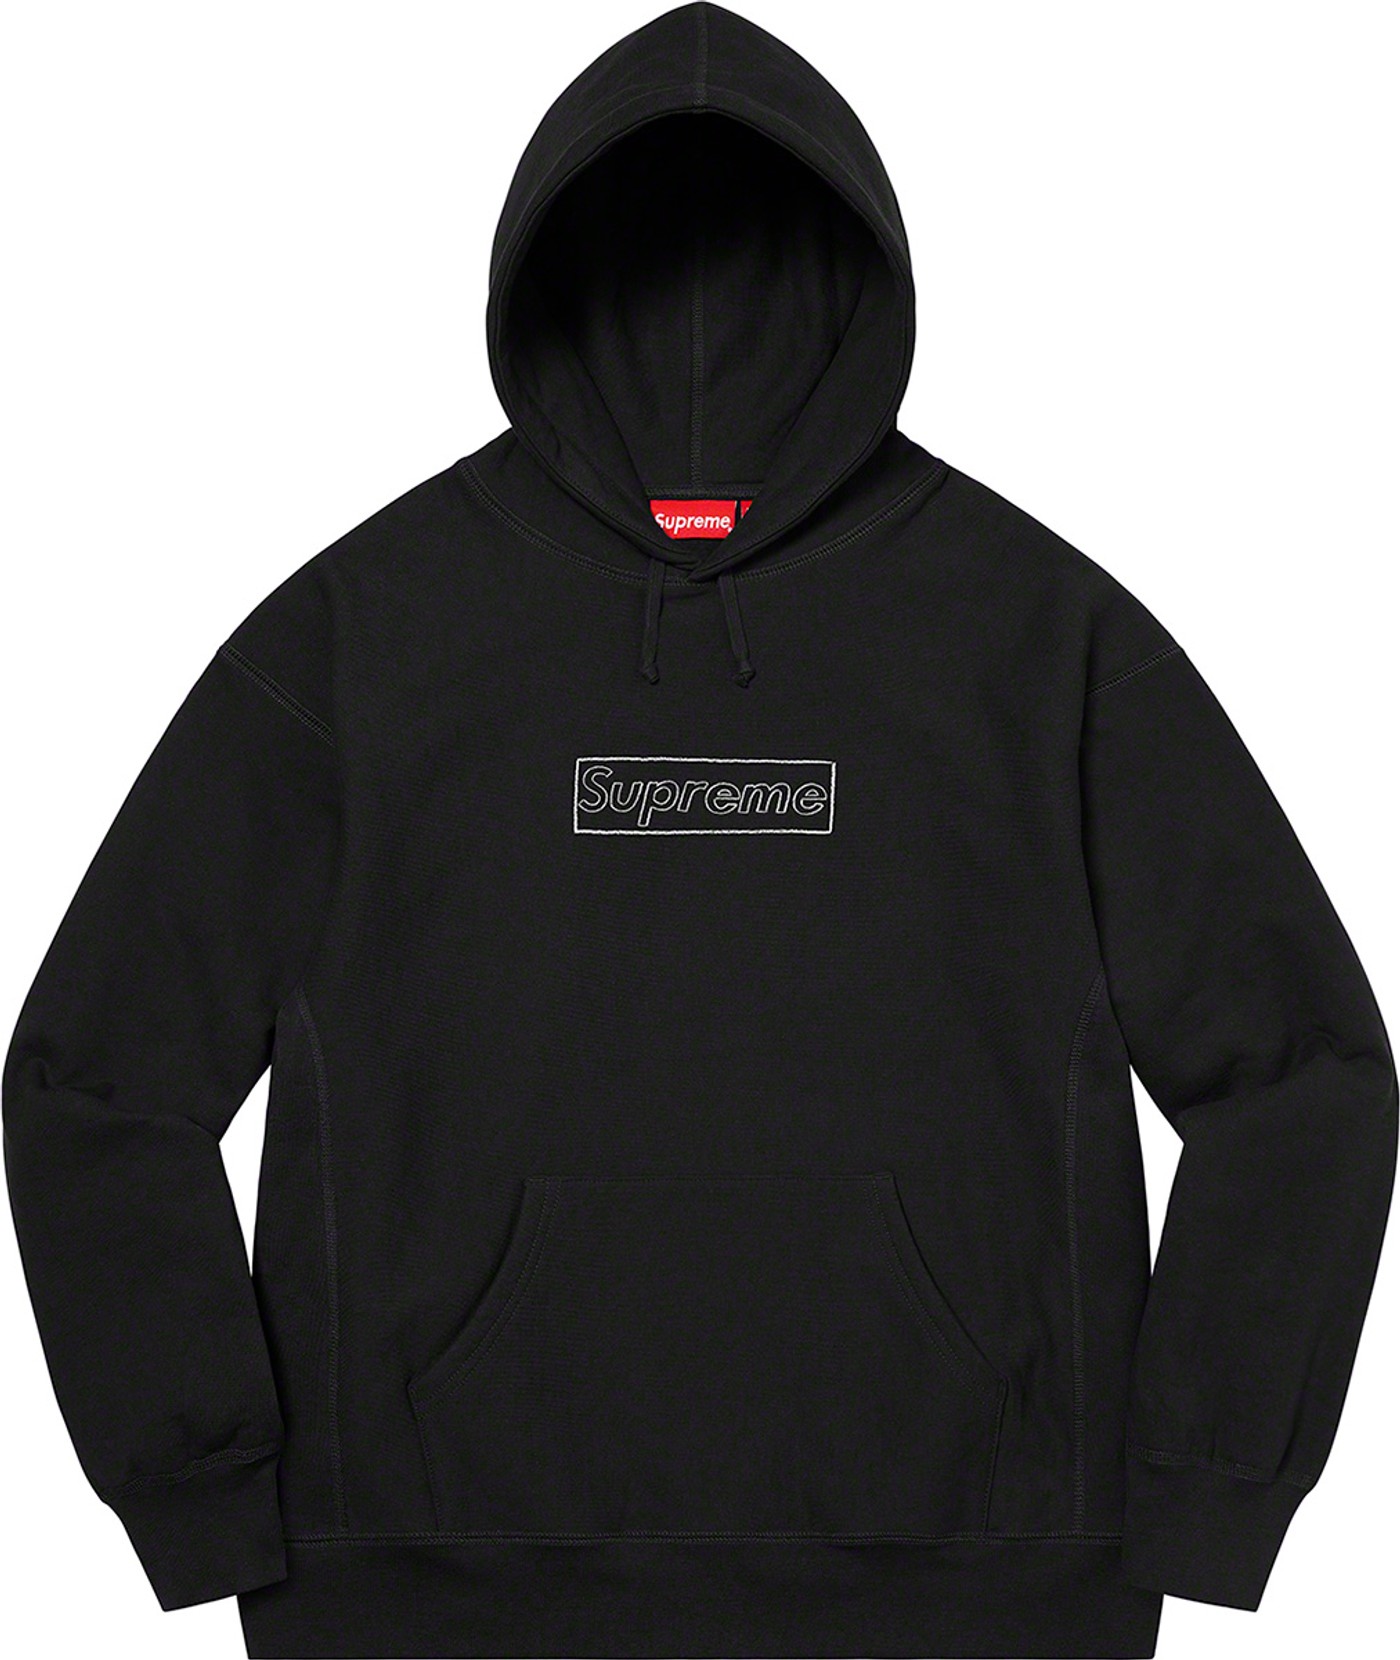 Swarovski® S Logo Hooded Sweatshirt - Spring/Summer 2021 Preview